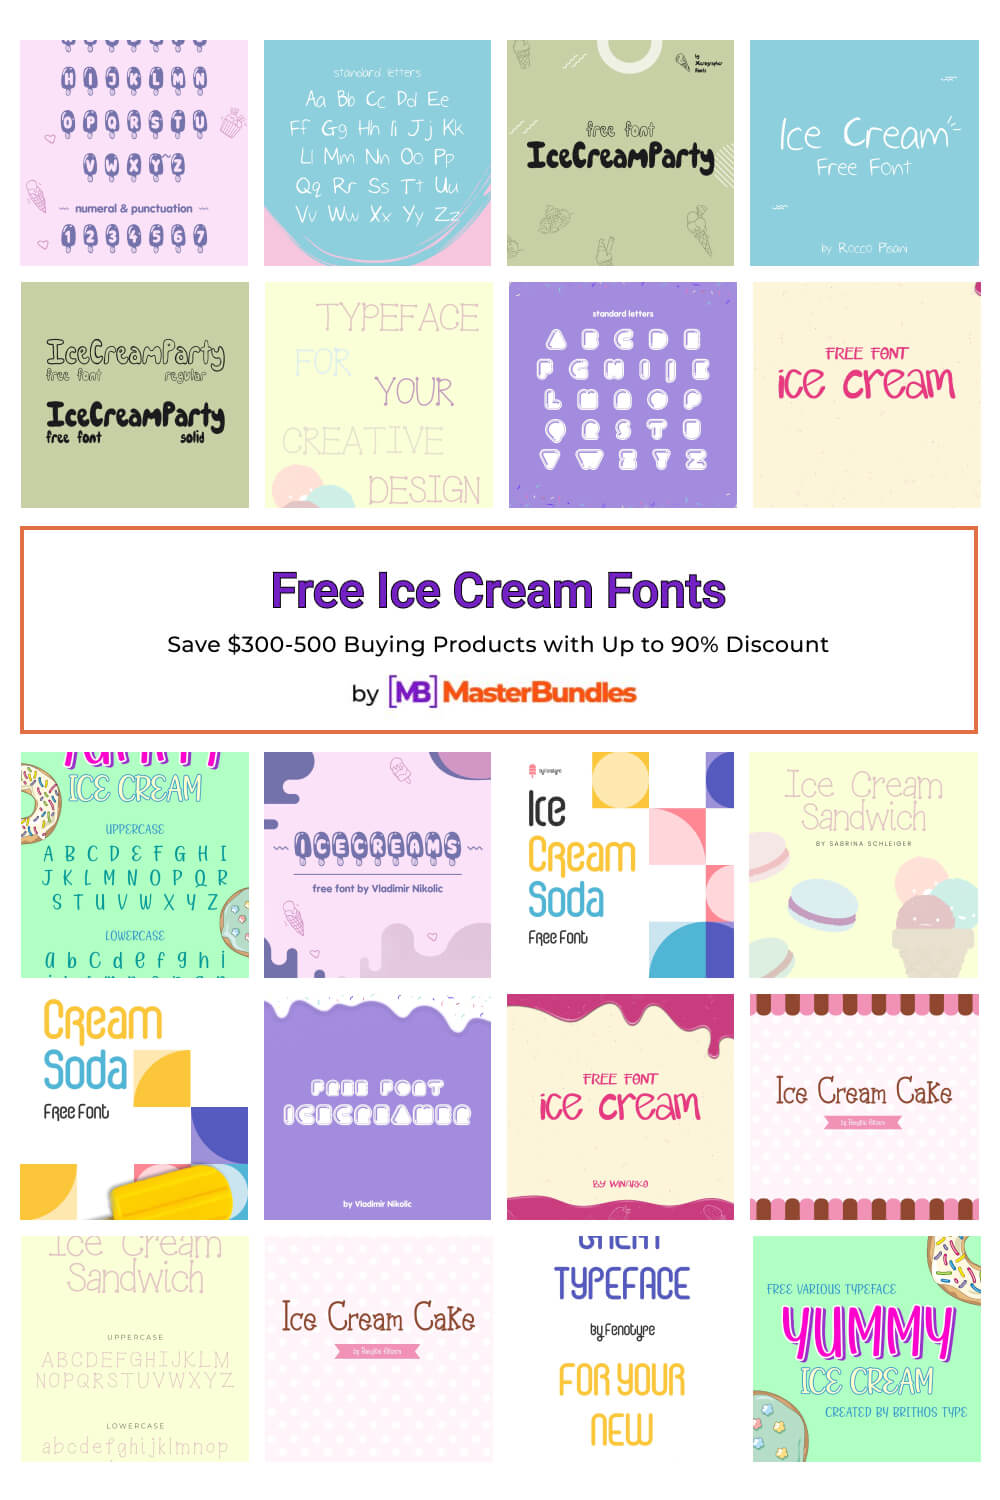 free ice cream fonts pinterest image.